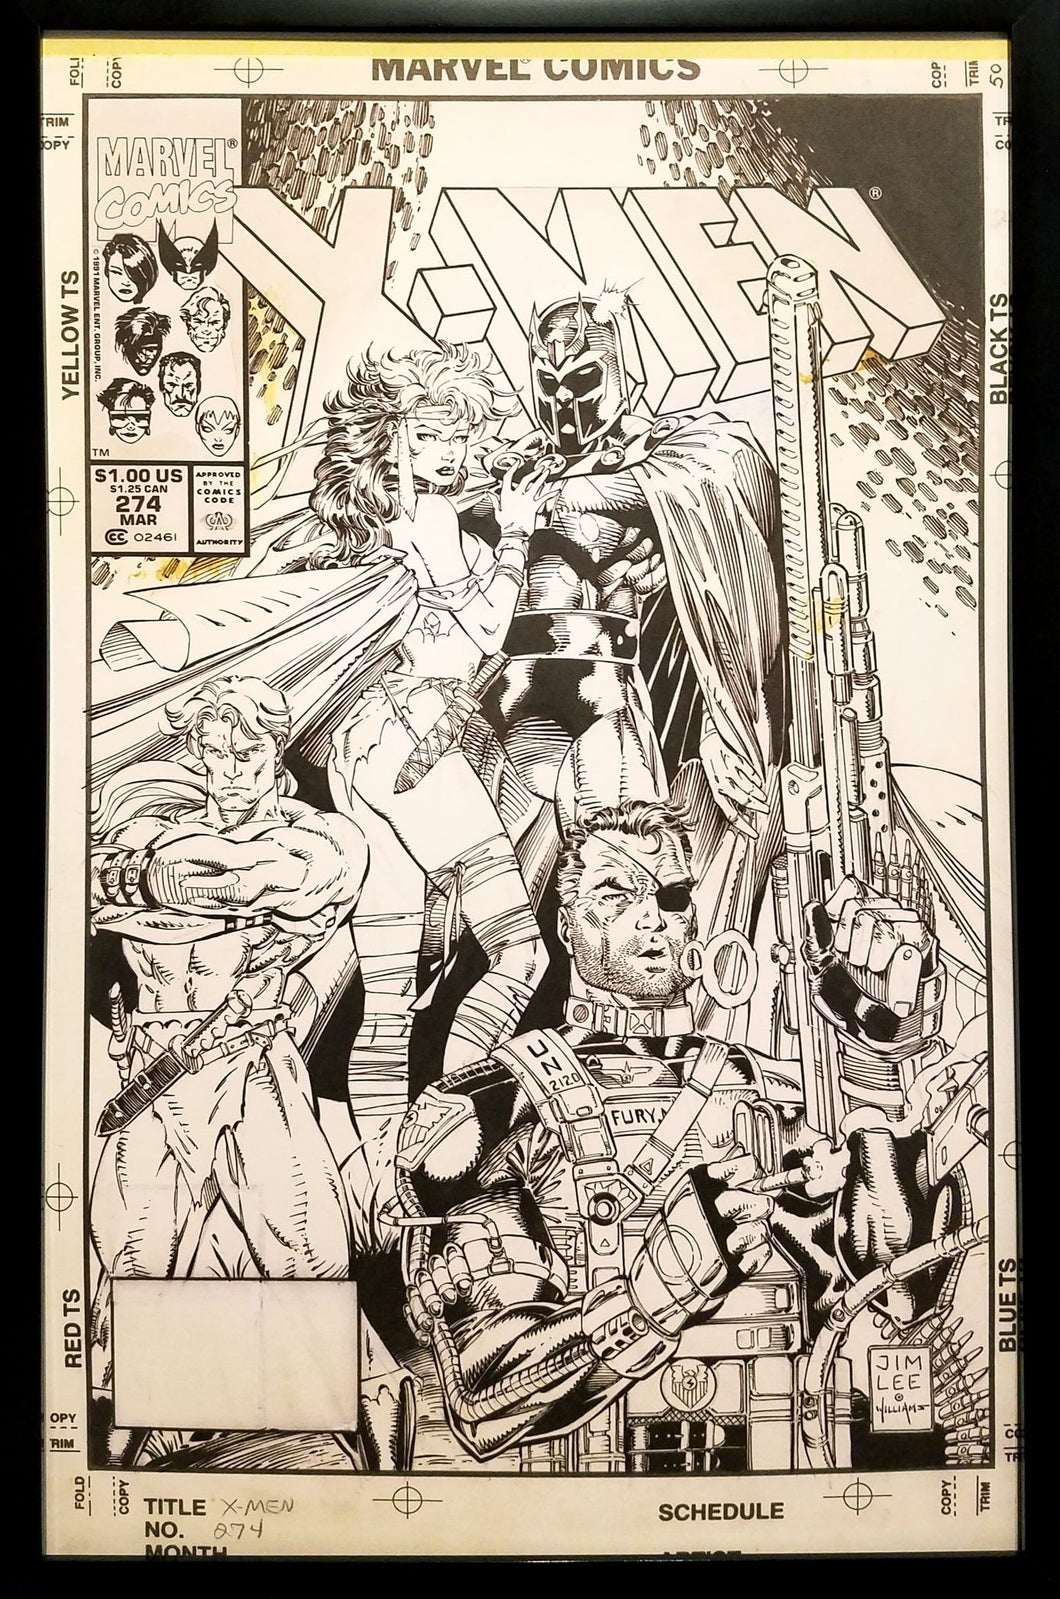 Uncanny X-Men #274 by Jim Lee 11x17 FRAMED Original Art Poster Marvel Comics